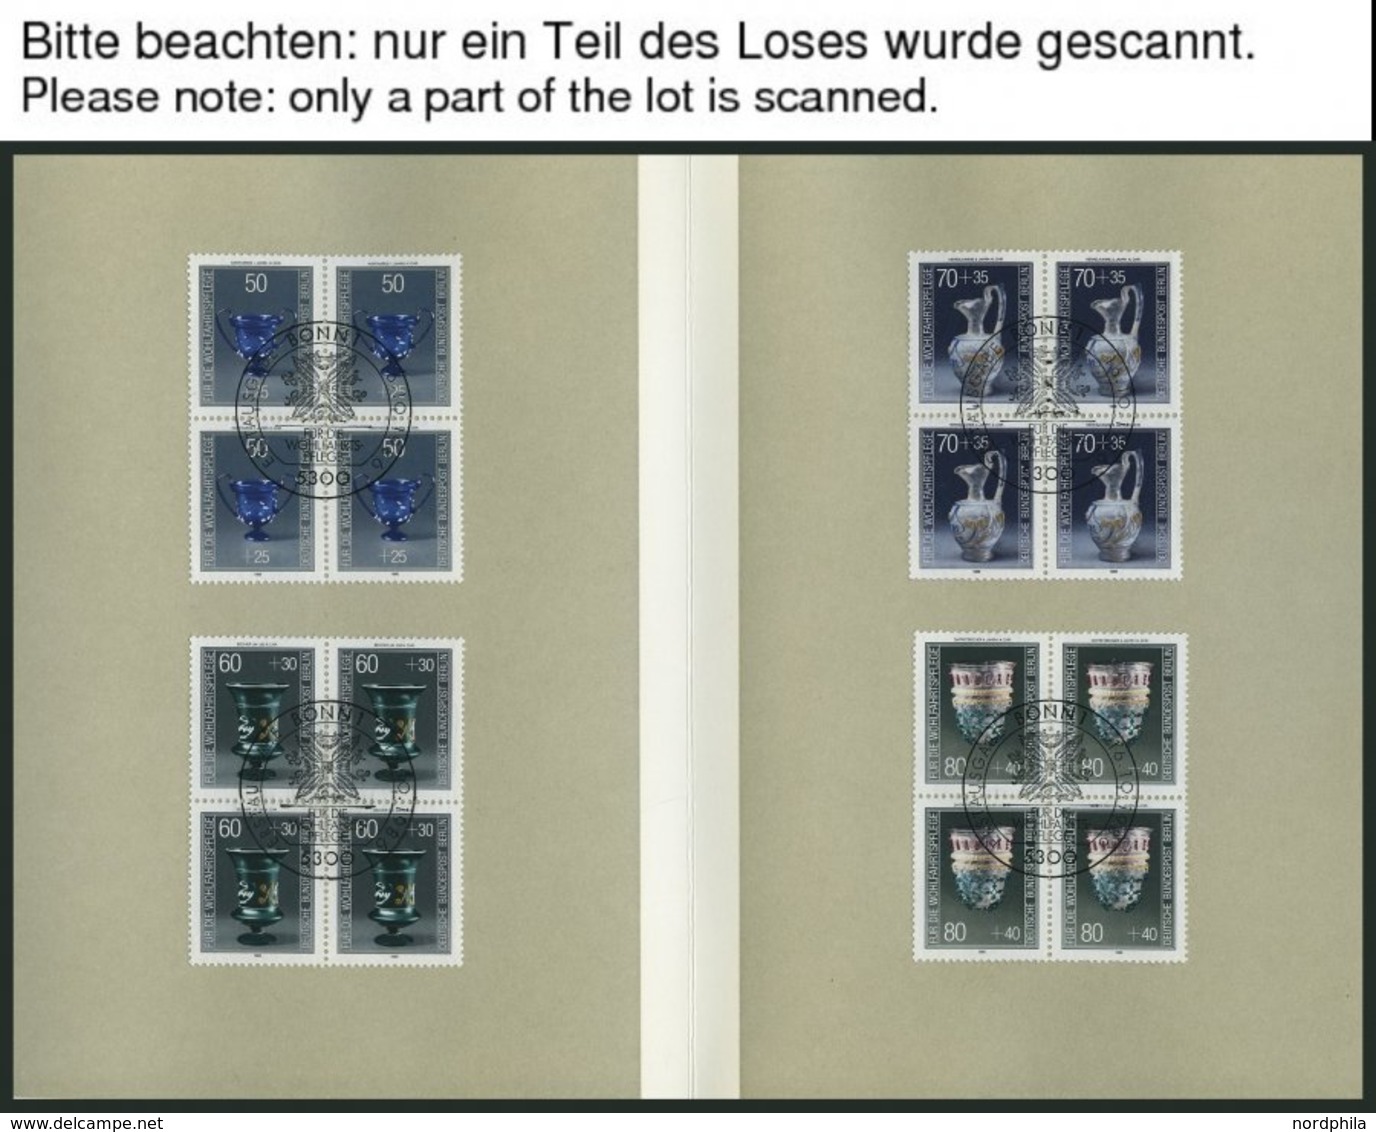 LOTS VB, BrfStk, 1986-2003, Wofa In Viererblocks Mit Ersttagssonderstempeln, In Großformatigen Faltkarten Des Bundesmini - Used Stamps